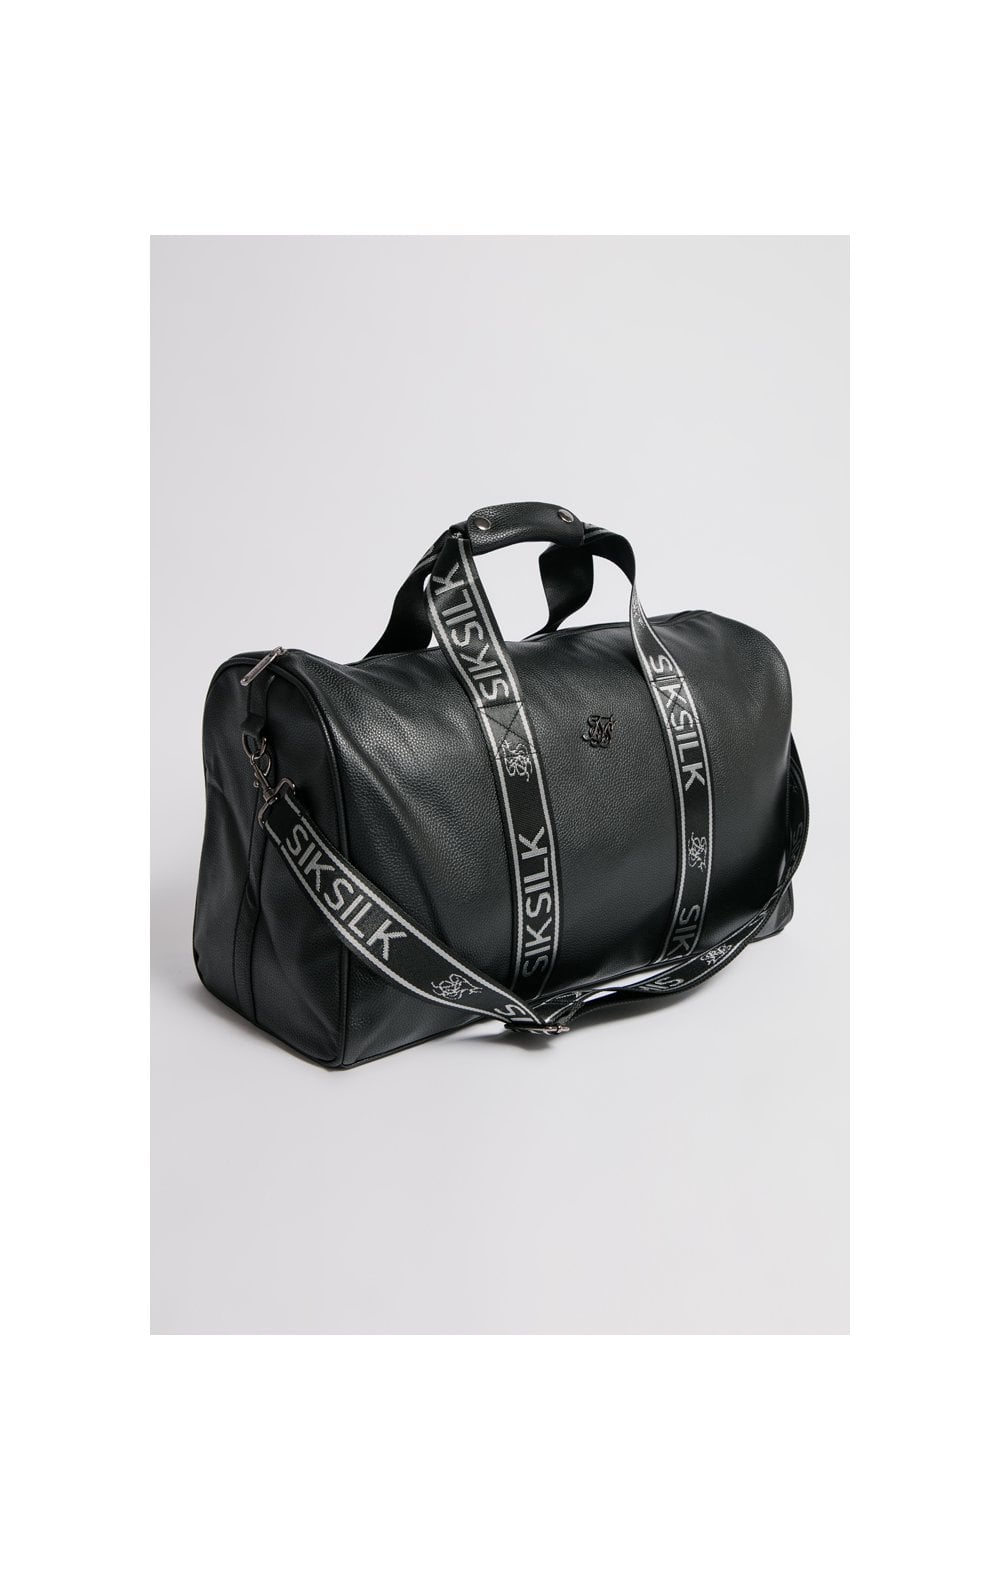 SikSilk Tape Travel Bag - Black (8)